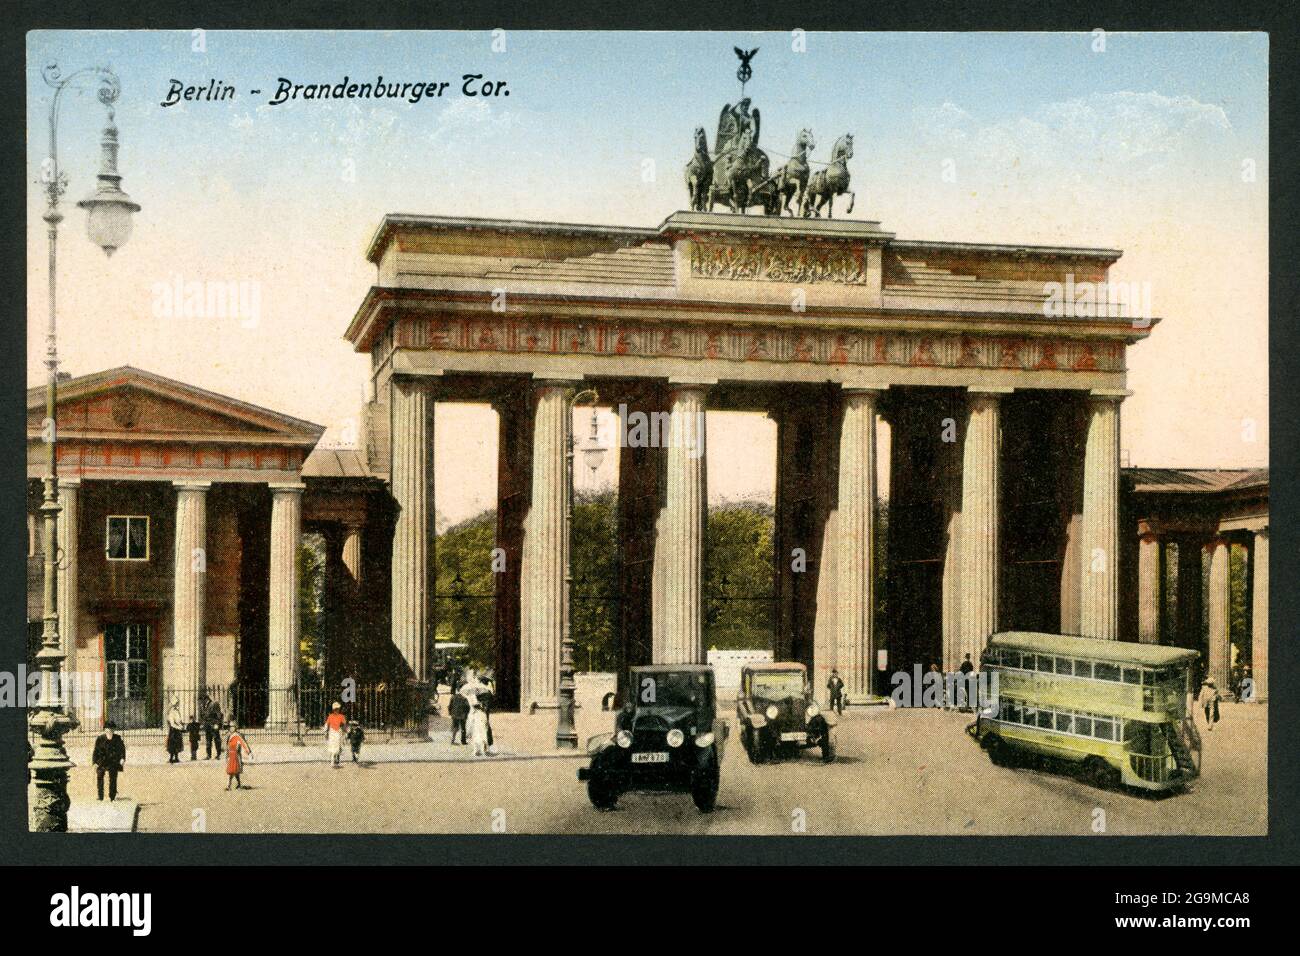 Geographie / Reisen, Deutschland, Berlin, Brandenburger Tor, Postkarte, Gesendet 08. 09. 1930, ADDITIONAL-RIGHTS-CLEARANCE-INFO-NOT-AVAILABLE Stockfoto